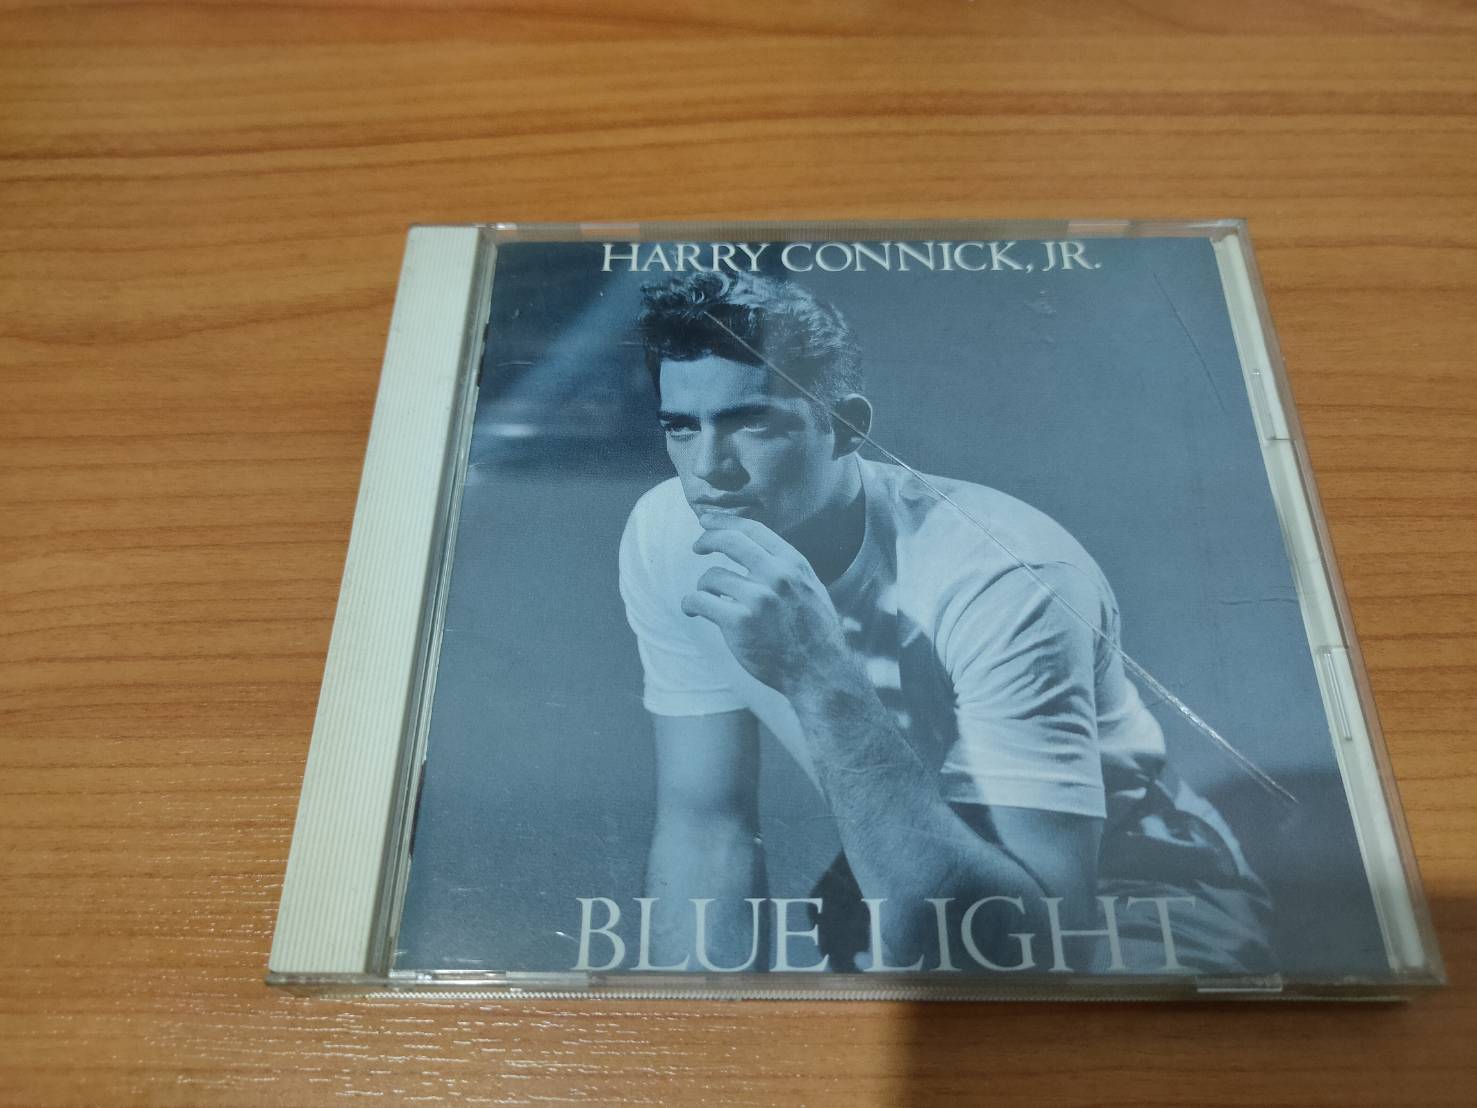 CD.MUSIC ซีดีเพลง เพลงสากล  Harry Connick,JR (***โปรดดูภาพสินค้าอย่างละเอียดก่อนทำการสั่งซื้อ*** )